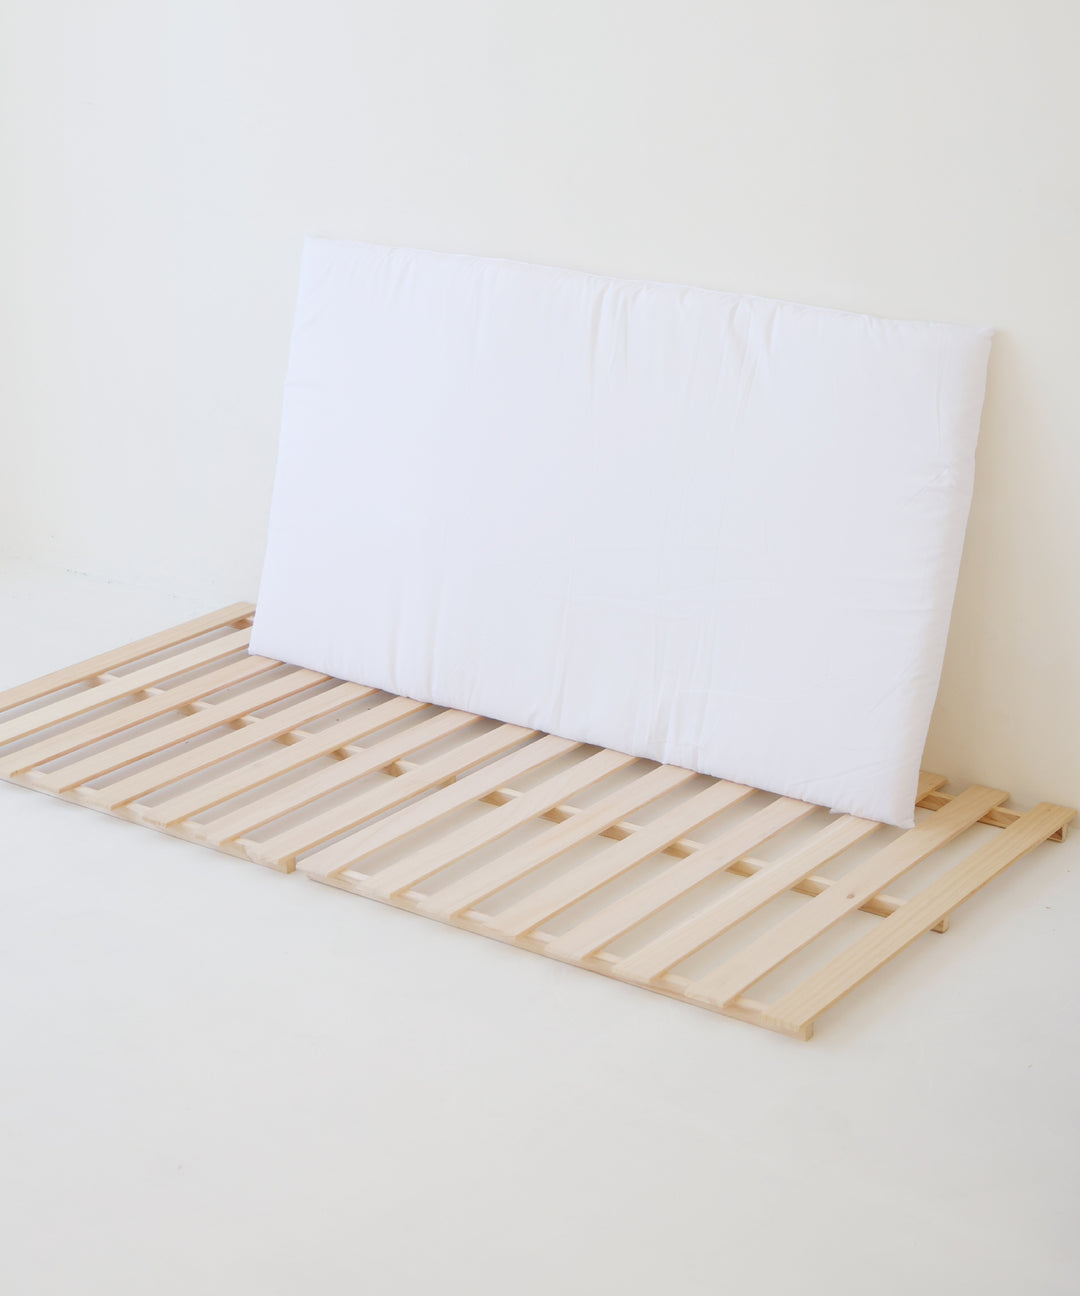 Washable nap futon set 5-pieces (Ibul fabric with Moroccan design)